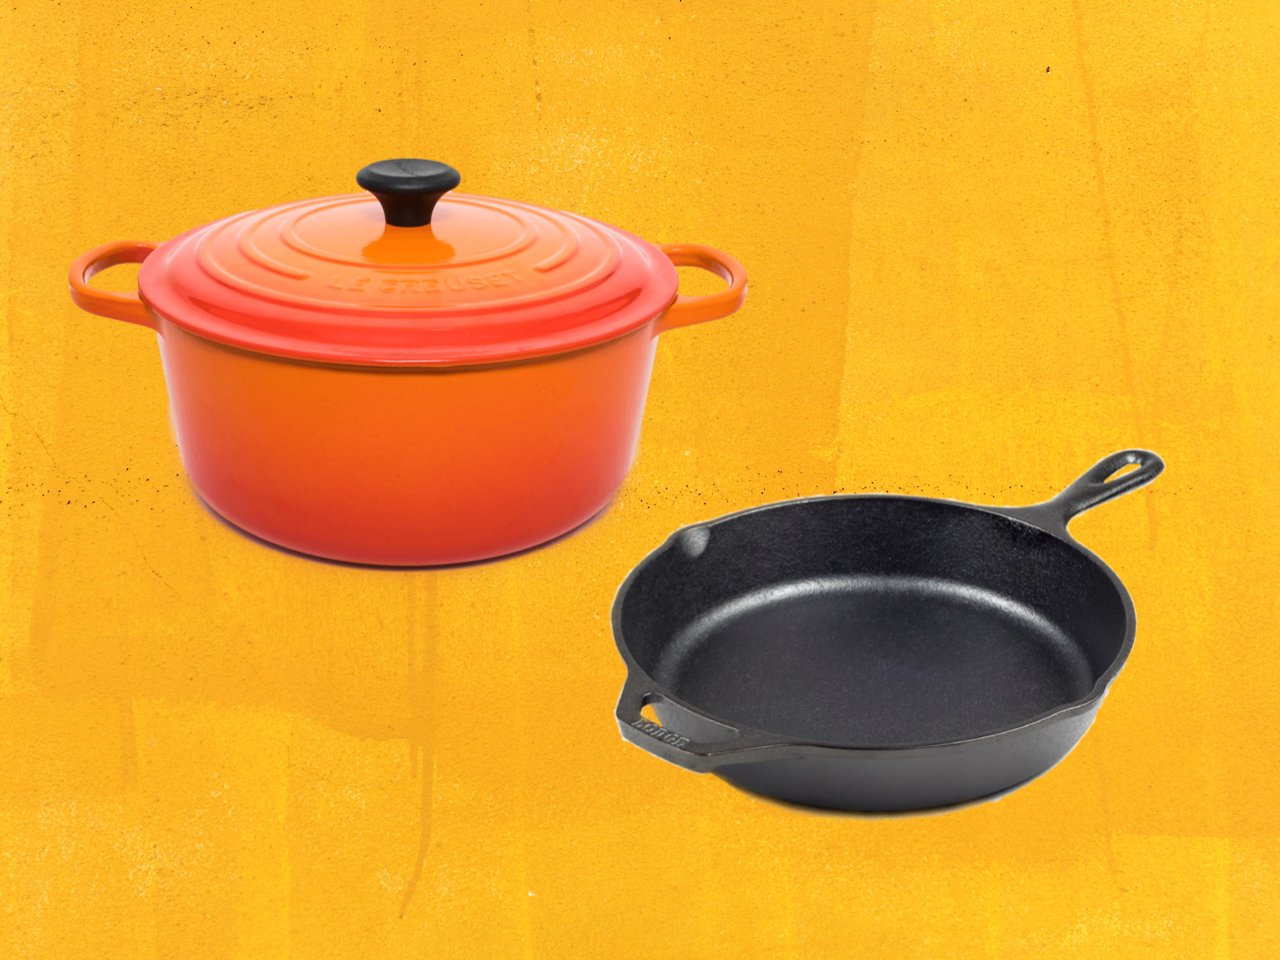 https://chatelaine.com/wp-content/uploads/2018/11/enameled-cast-iron-cookware-dutch-oven-cast-iron-skillet-comparison.jpg